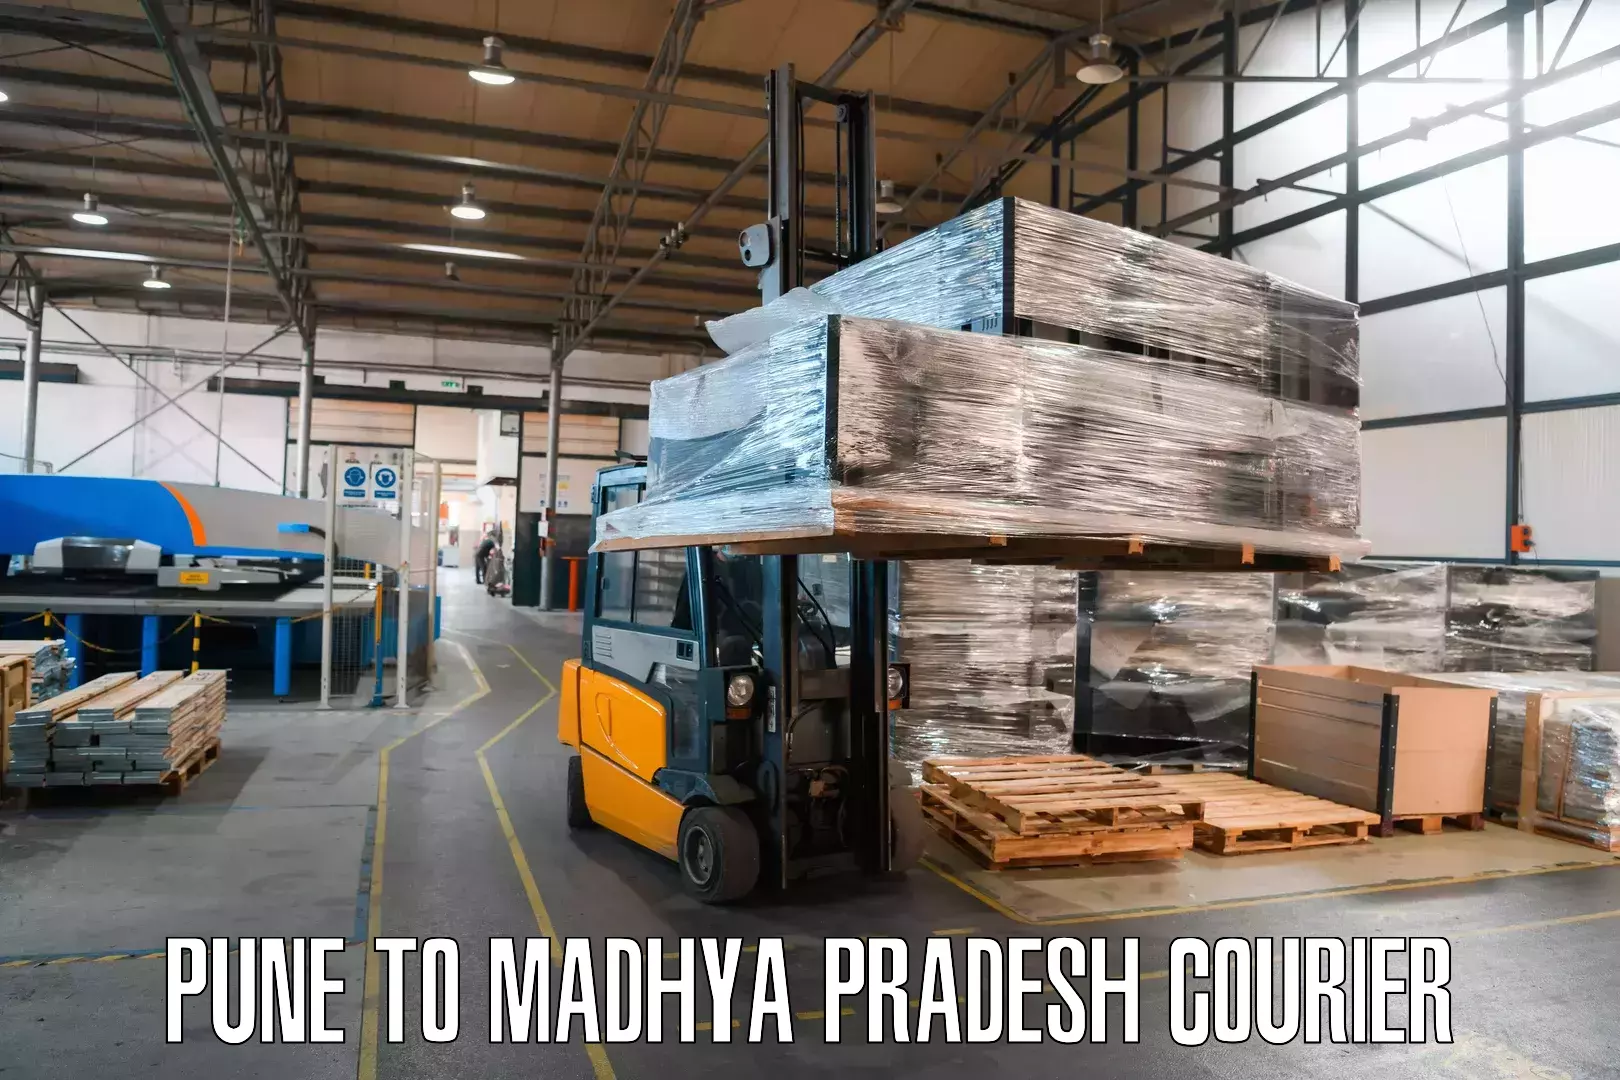 Courier service comparison Pune to Badnagar